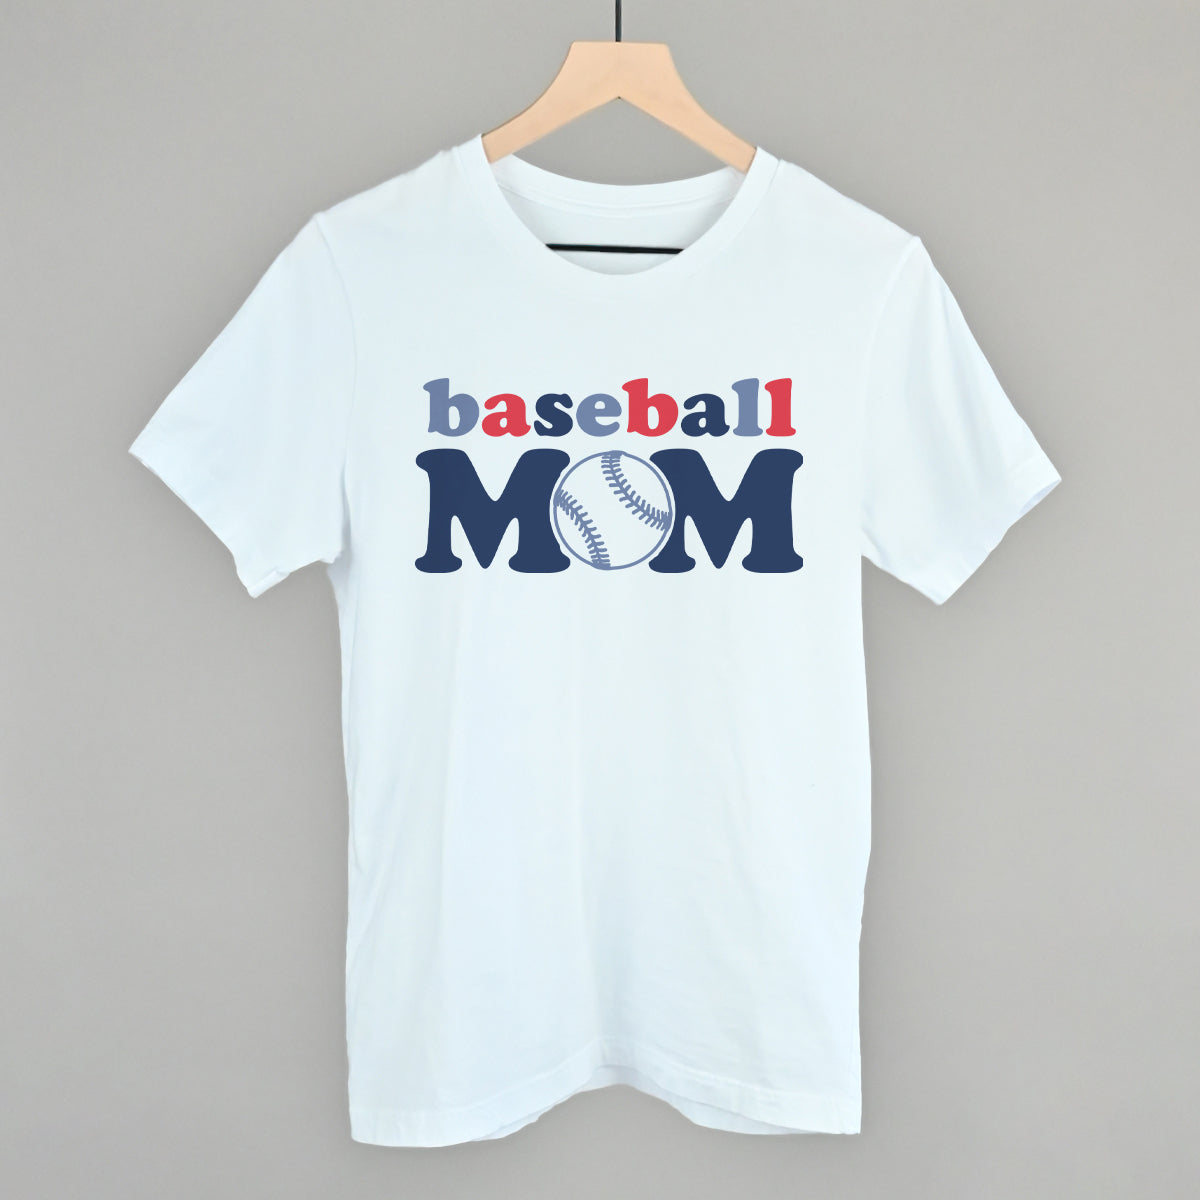 Baseball Mom (Multi)